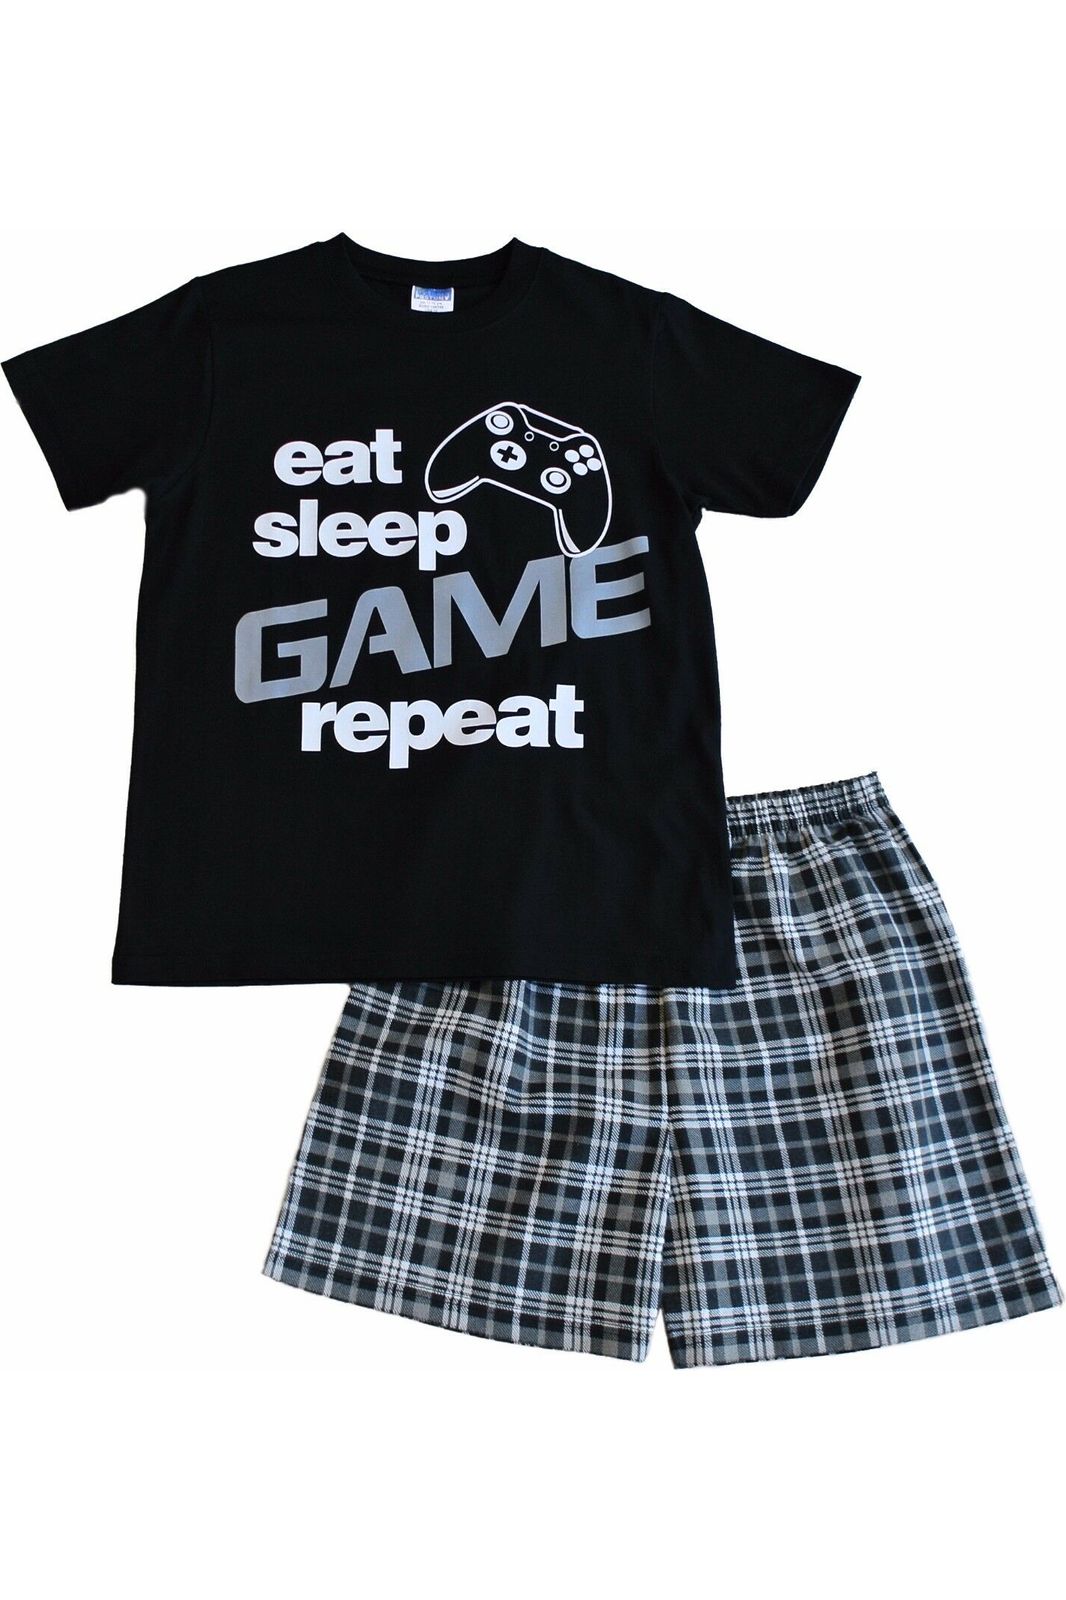 Eat Sleep Game Short Pyjamas Black And White